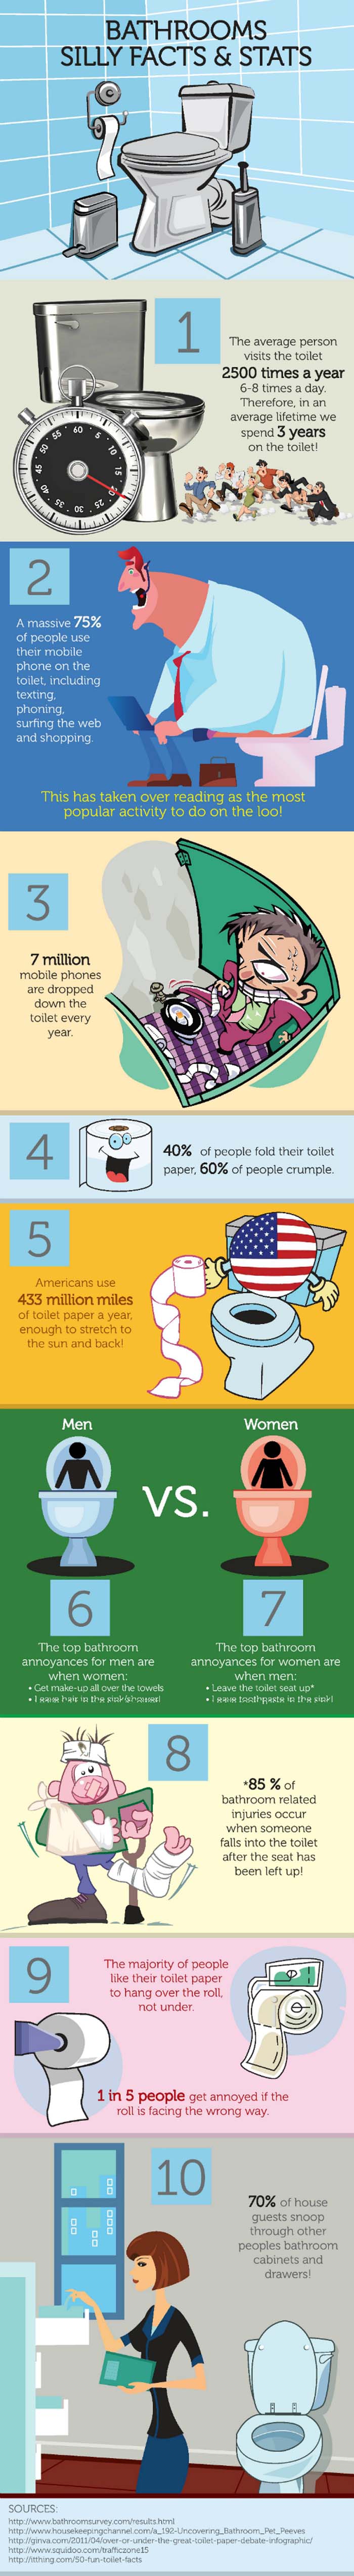 Bathroom Facts